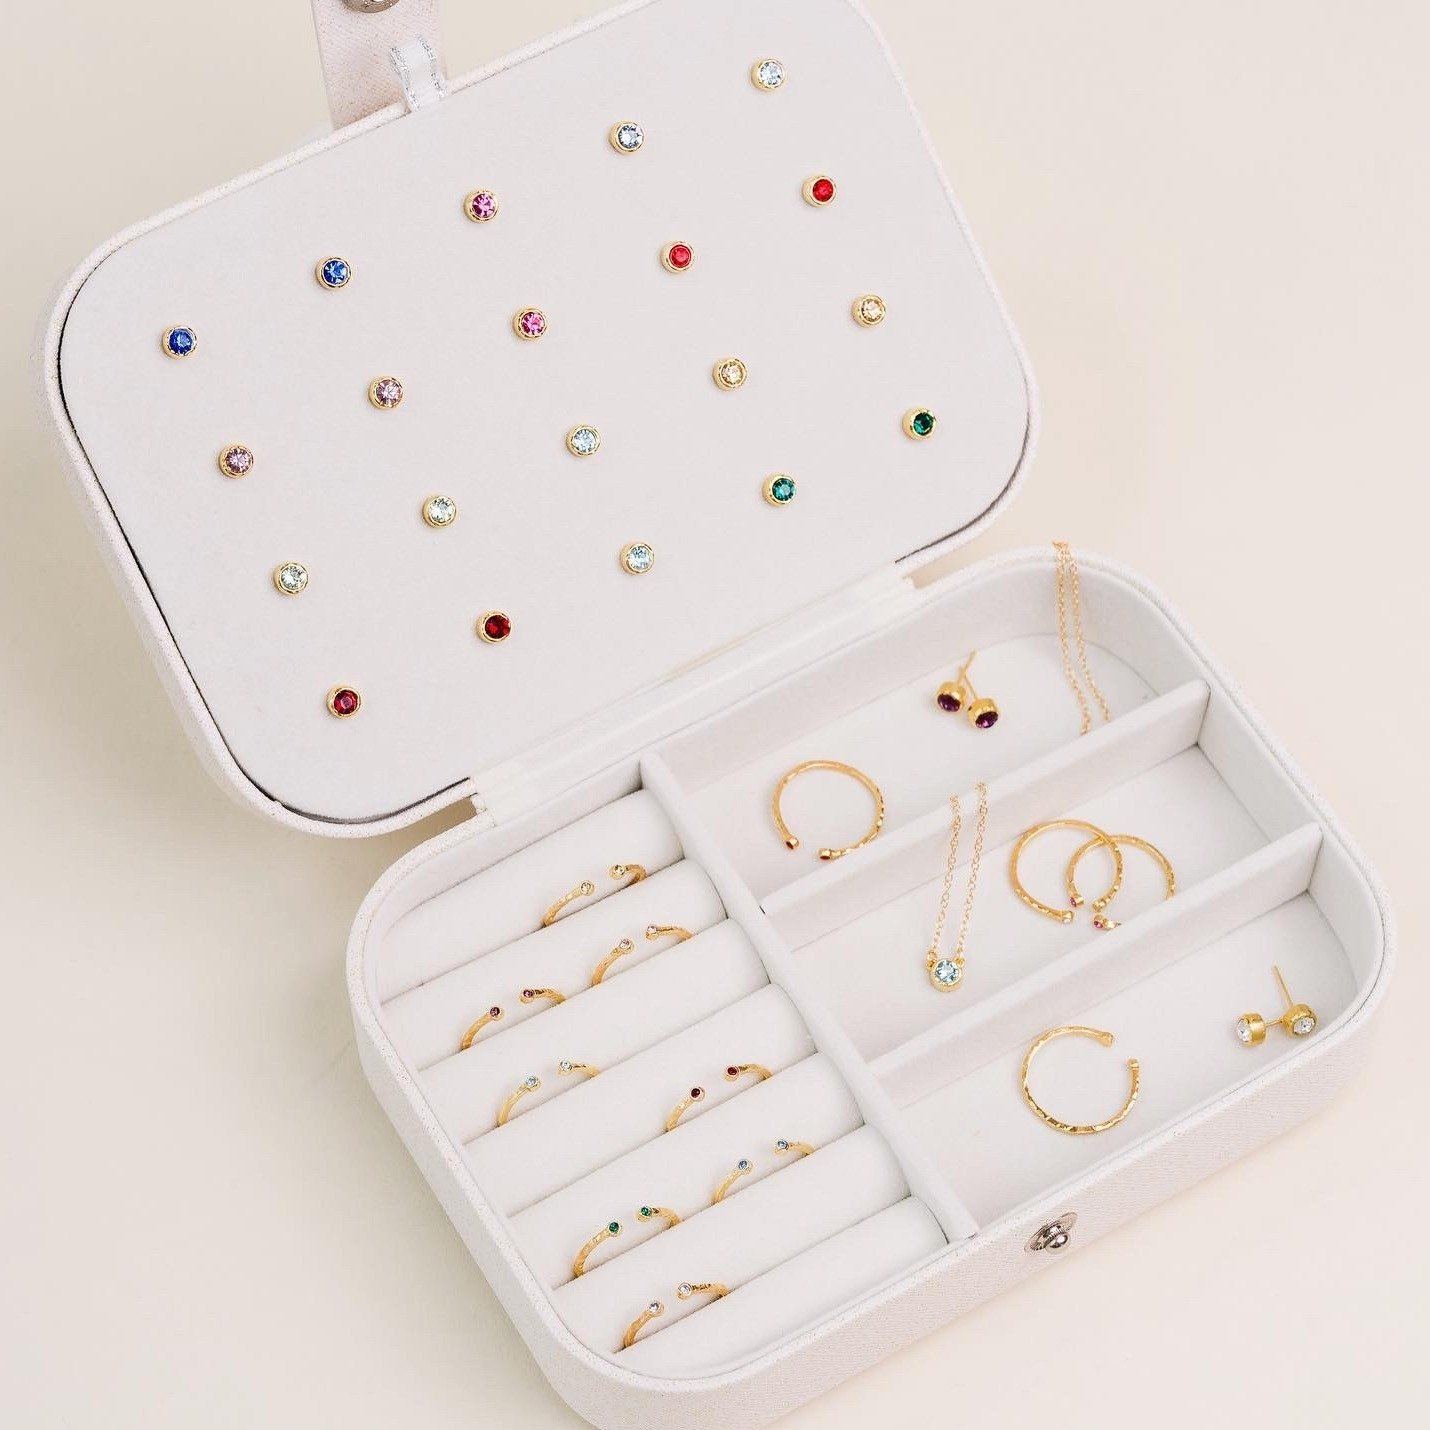 Jewelry Case, travel case to organize your jewelry, white Katie Dean Jewelry